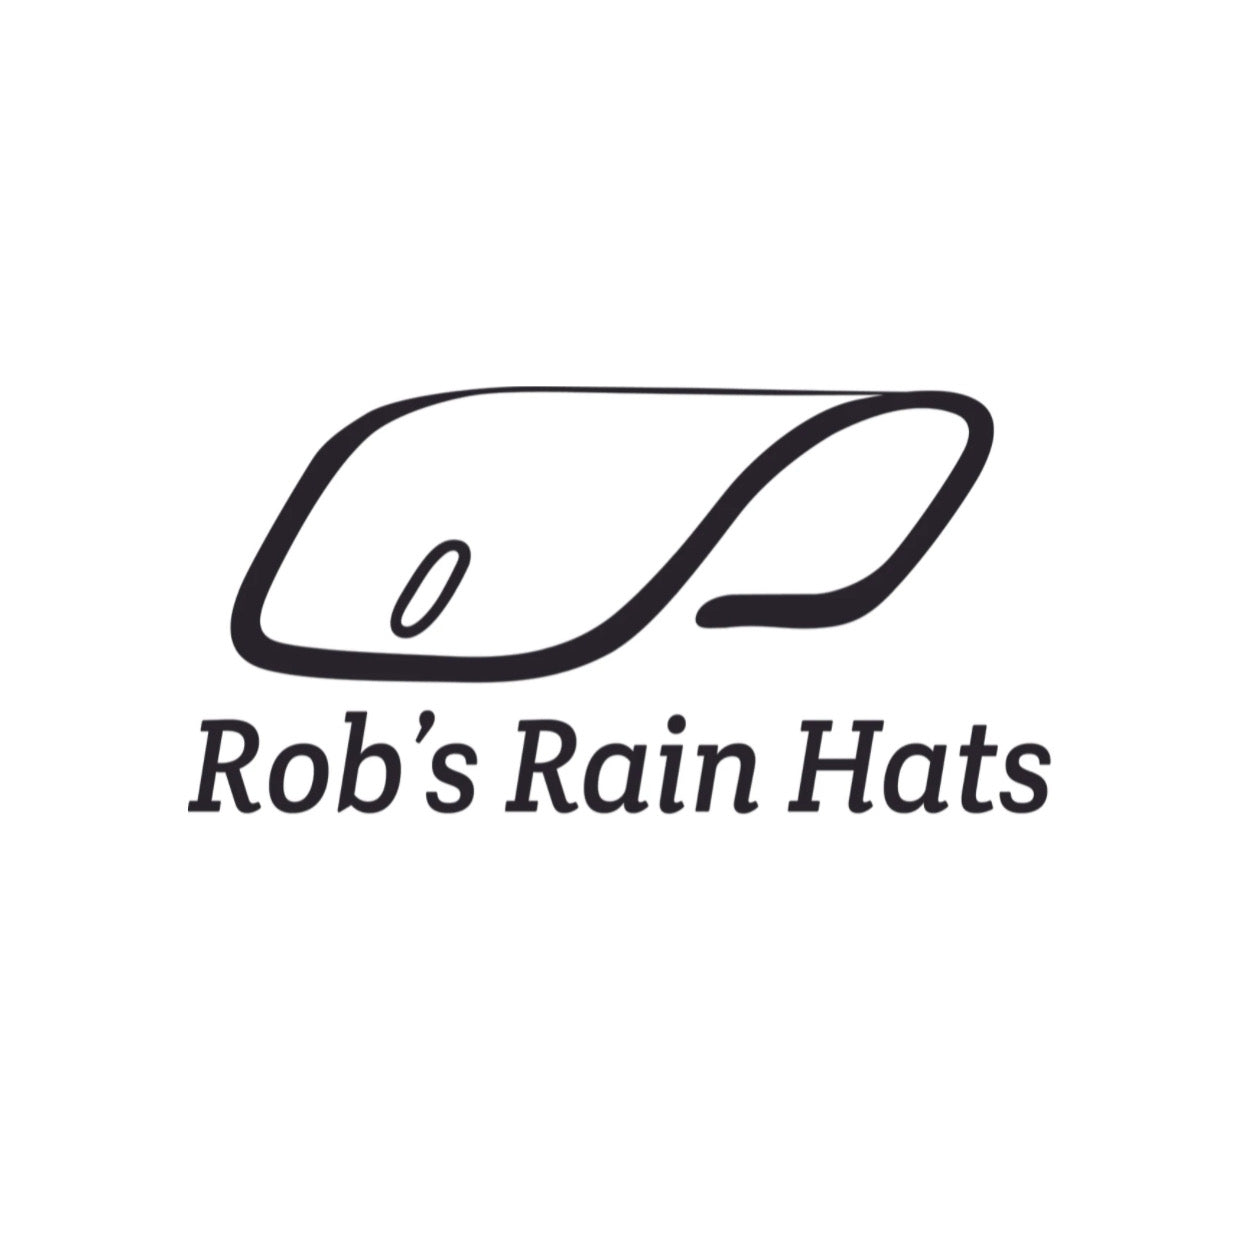 Rob’s Rain Hats